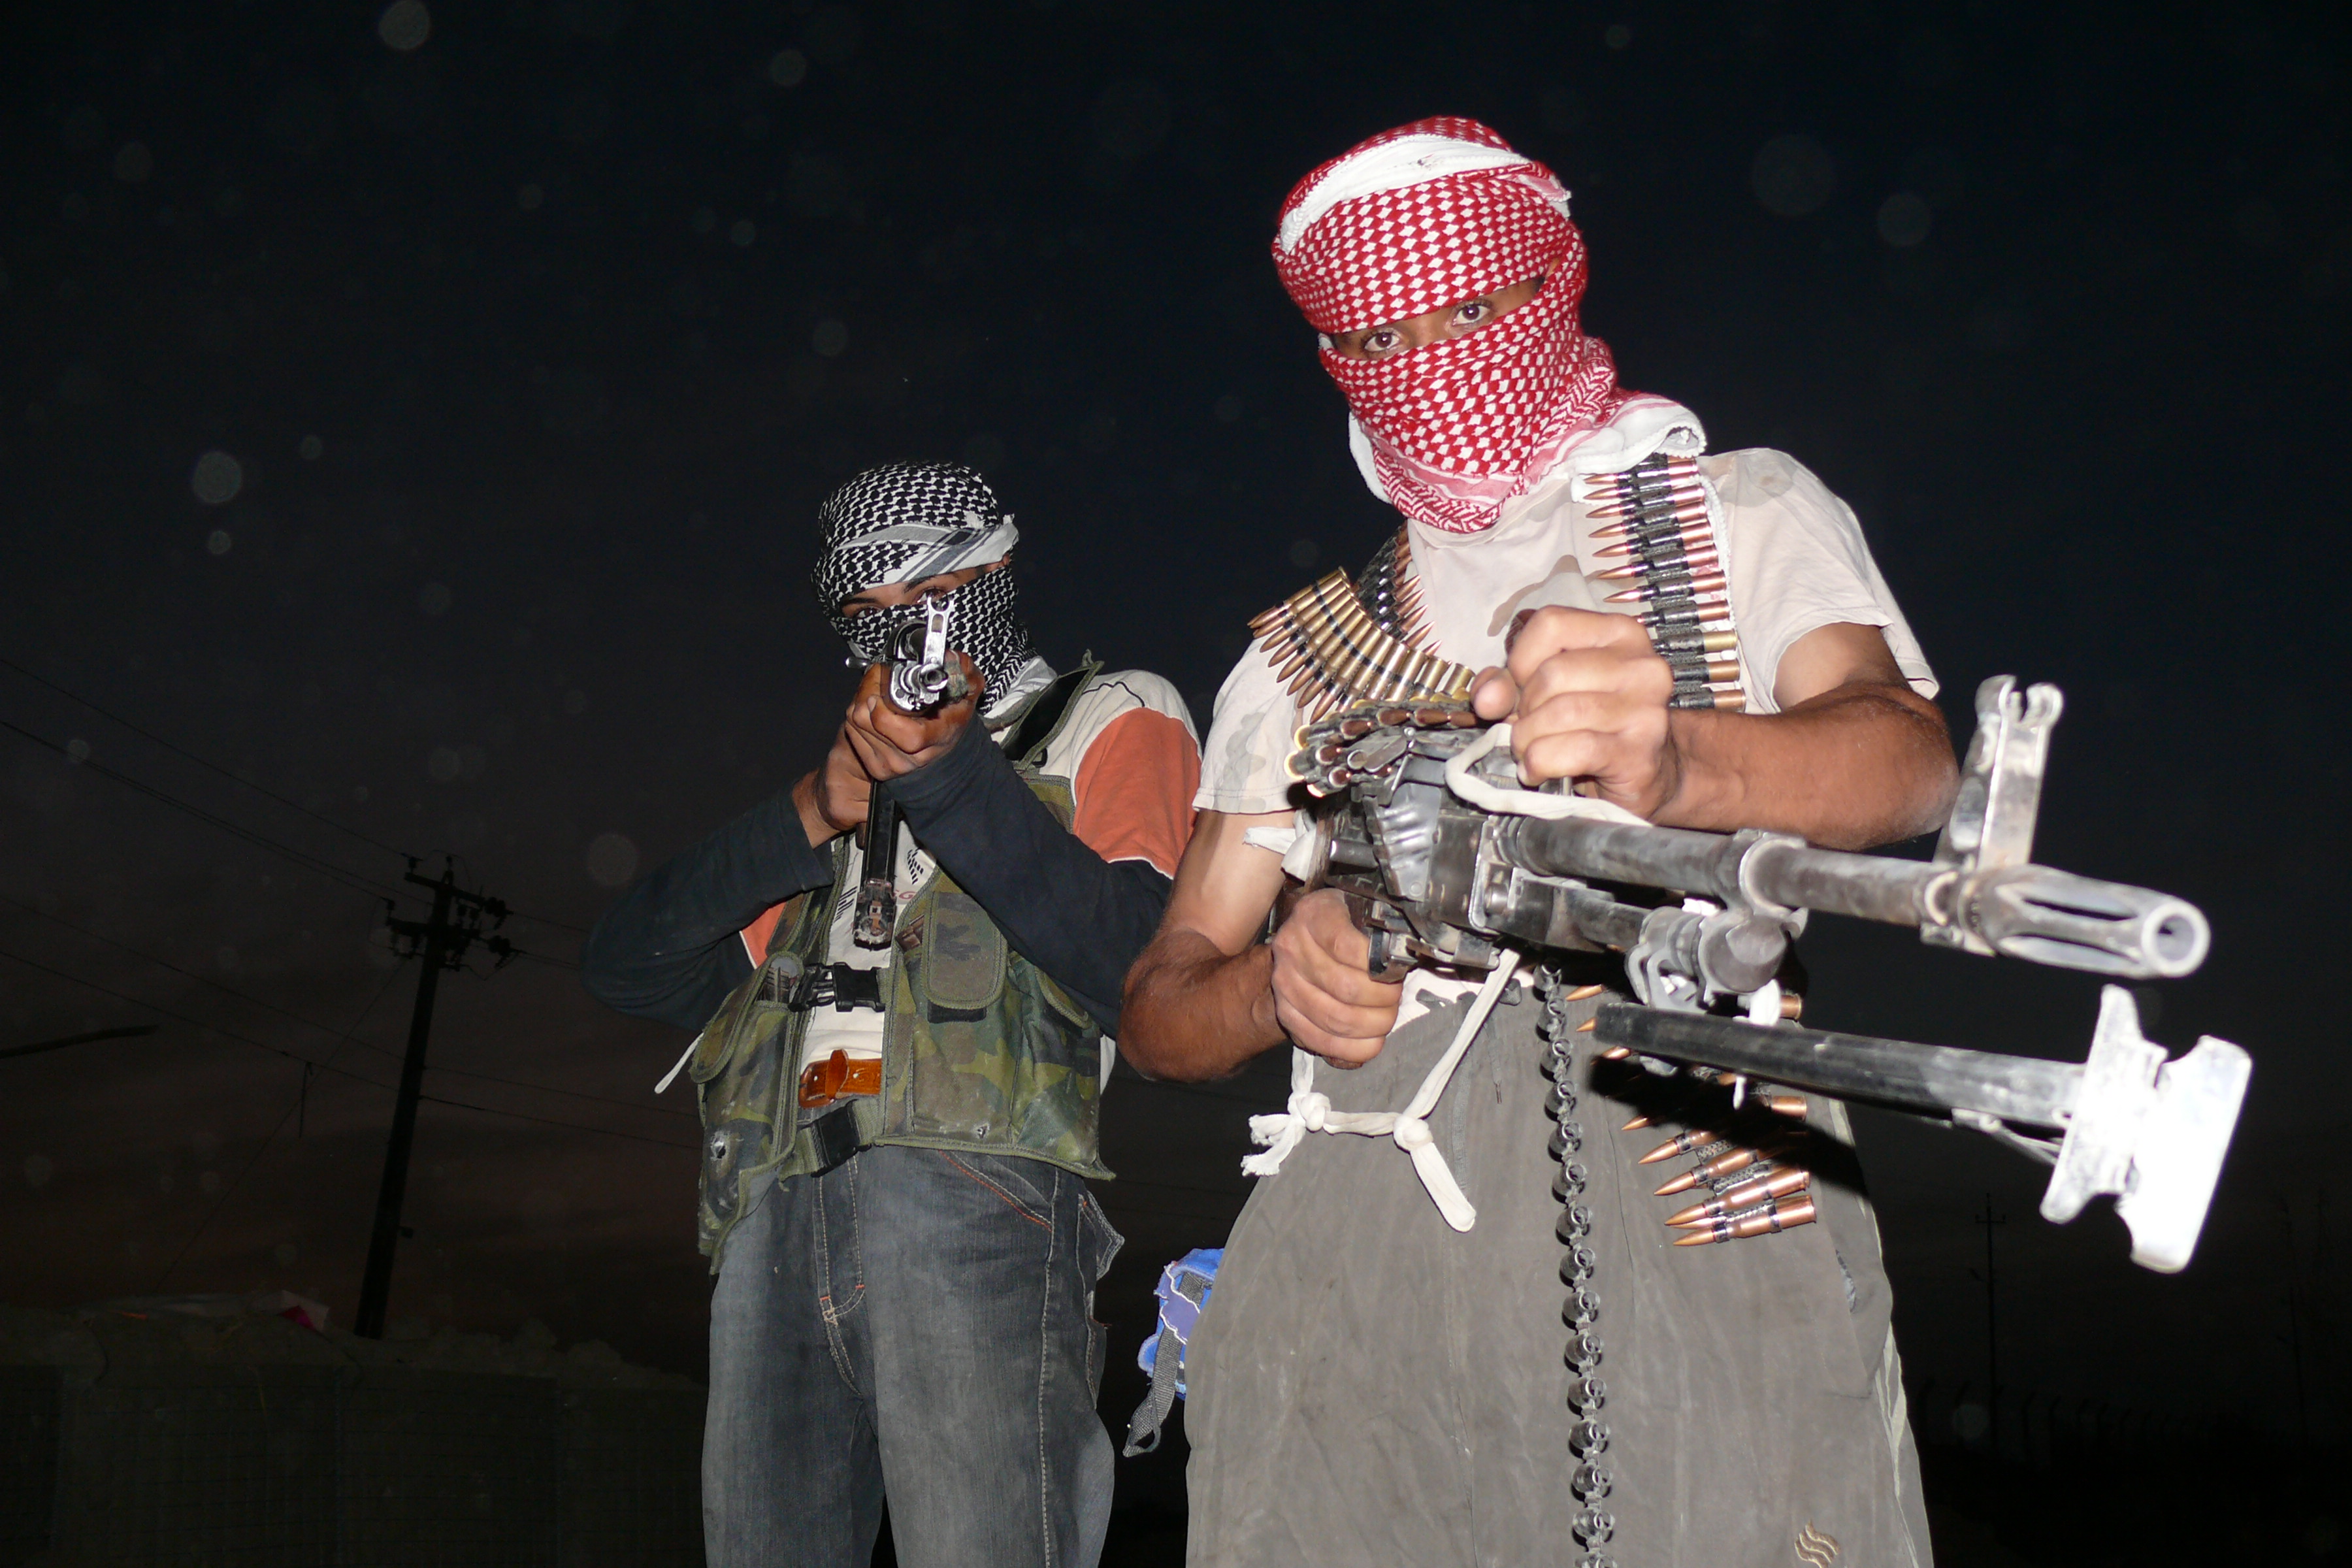 MENA: ISIS Shia attacks could trigger regional sectarian warfare